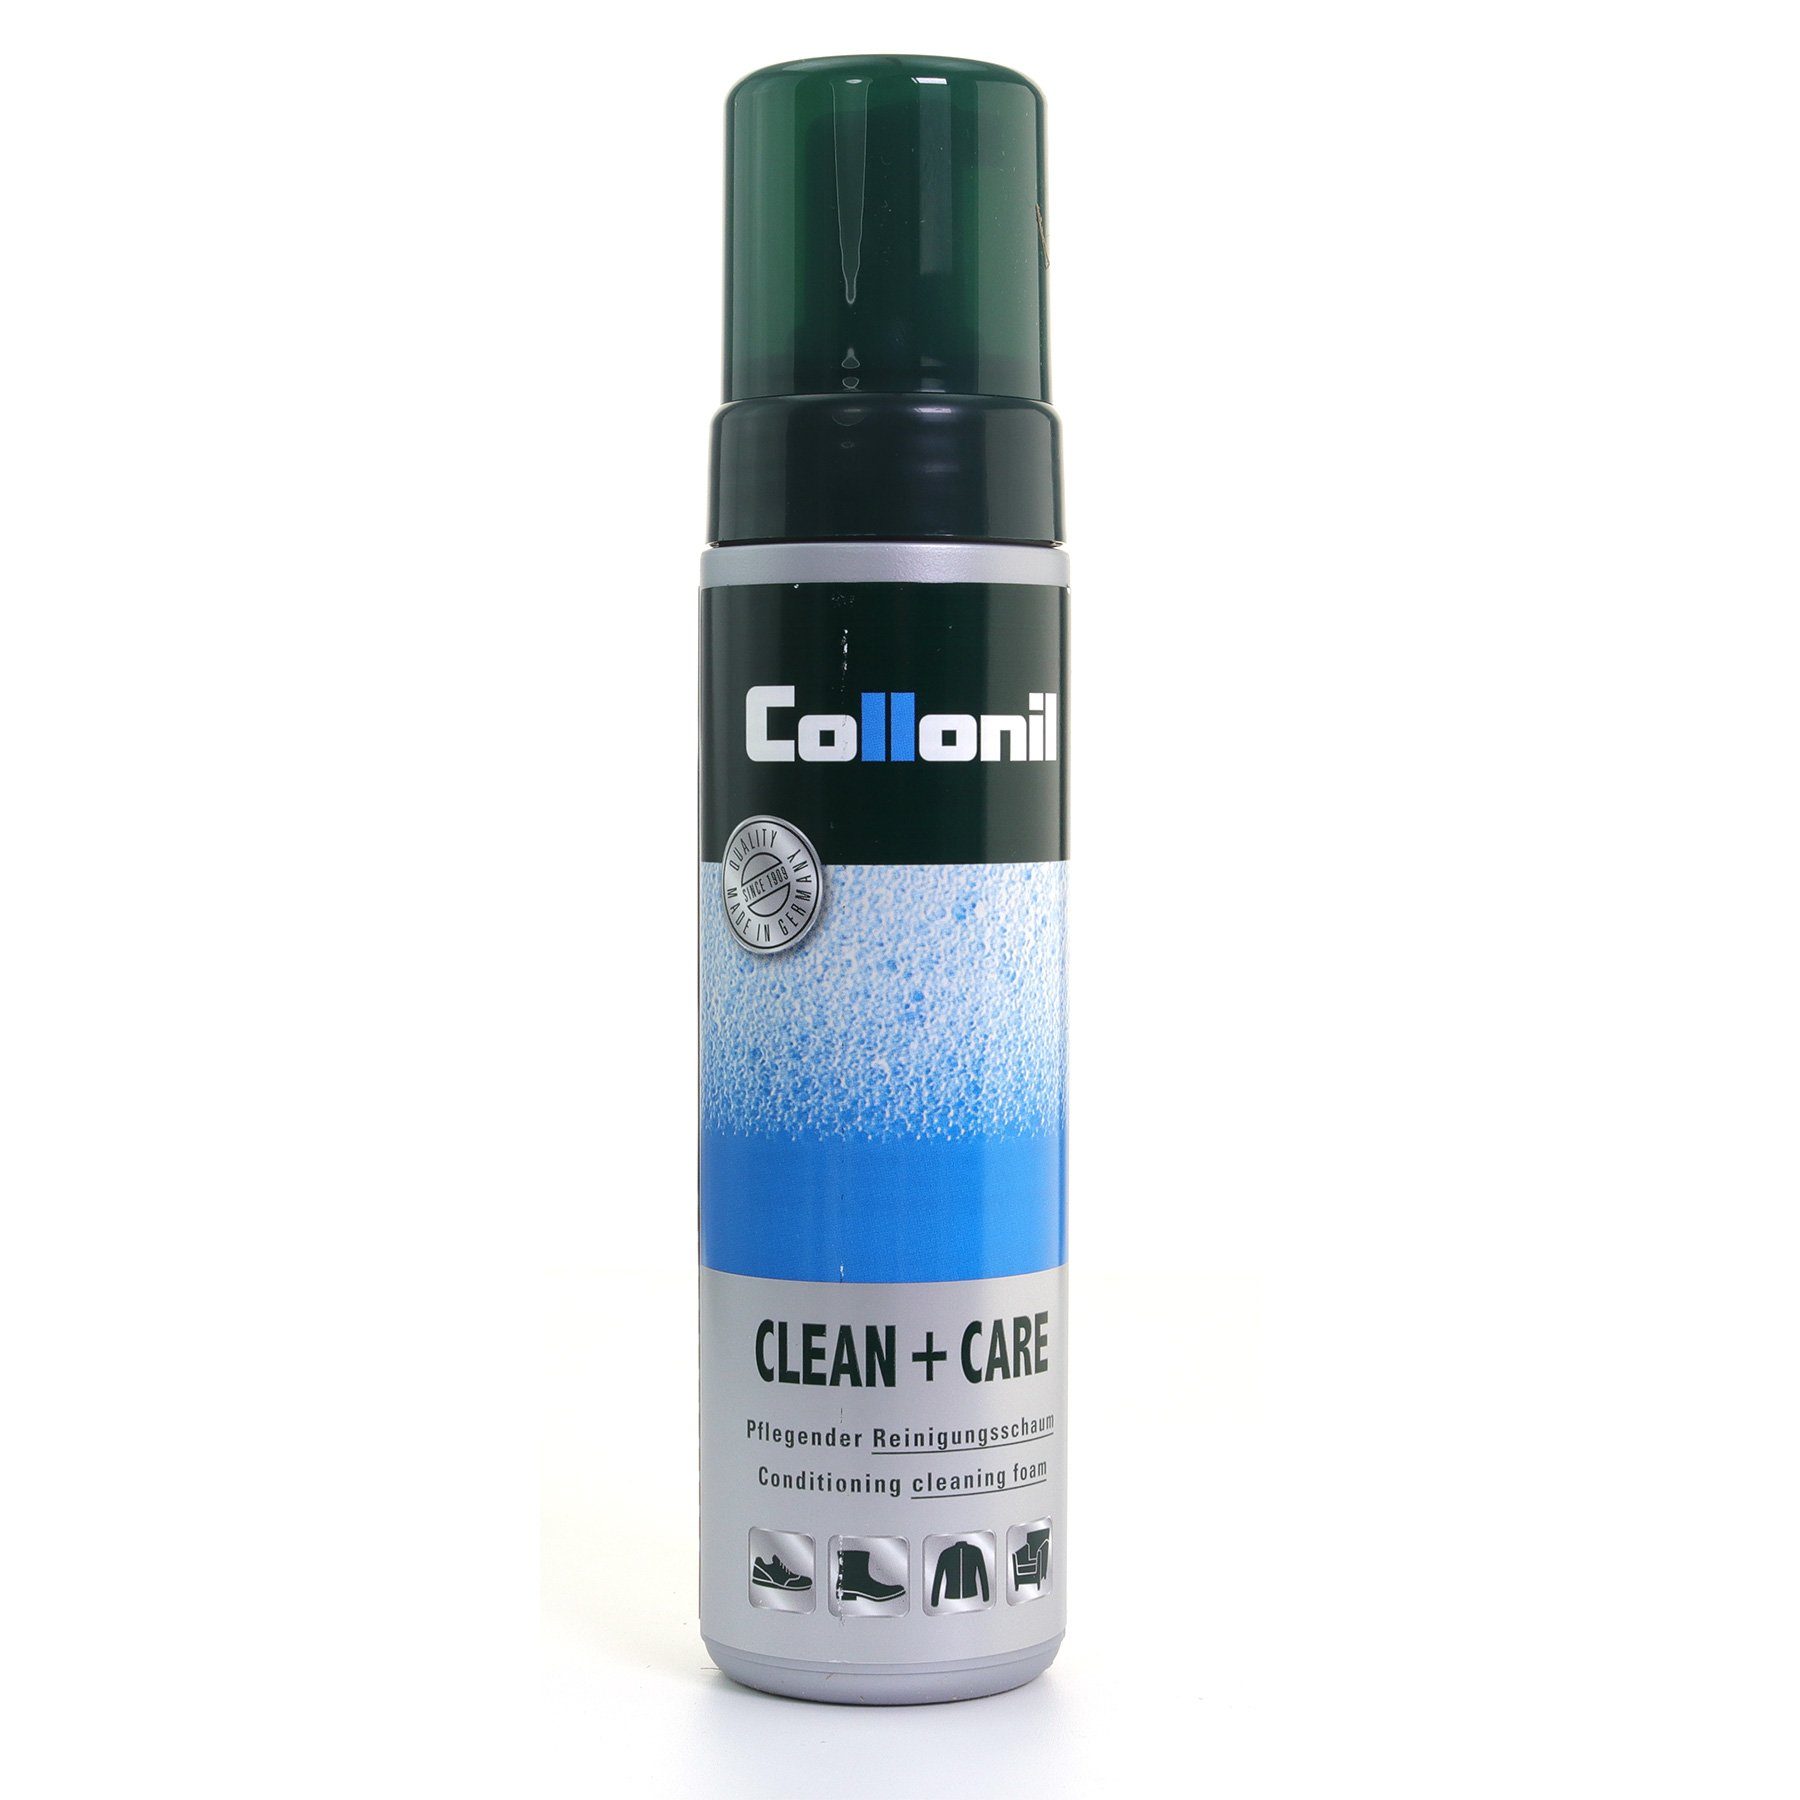 Collonil Collonil Clean + Care Classic 200ml universelle Reinigungsschaum Lederpflegeset